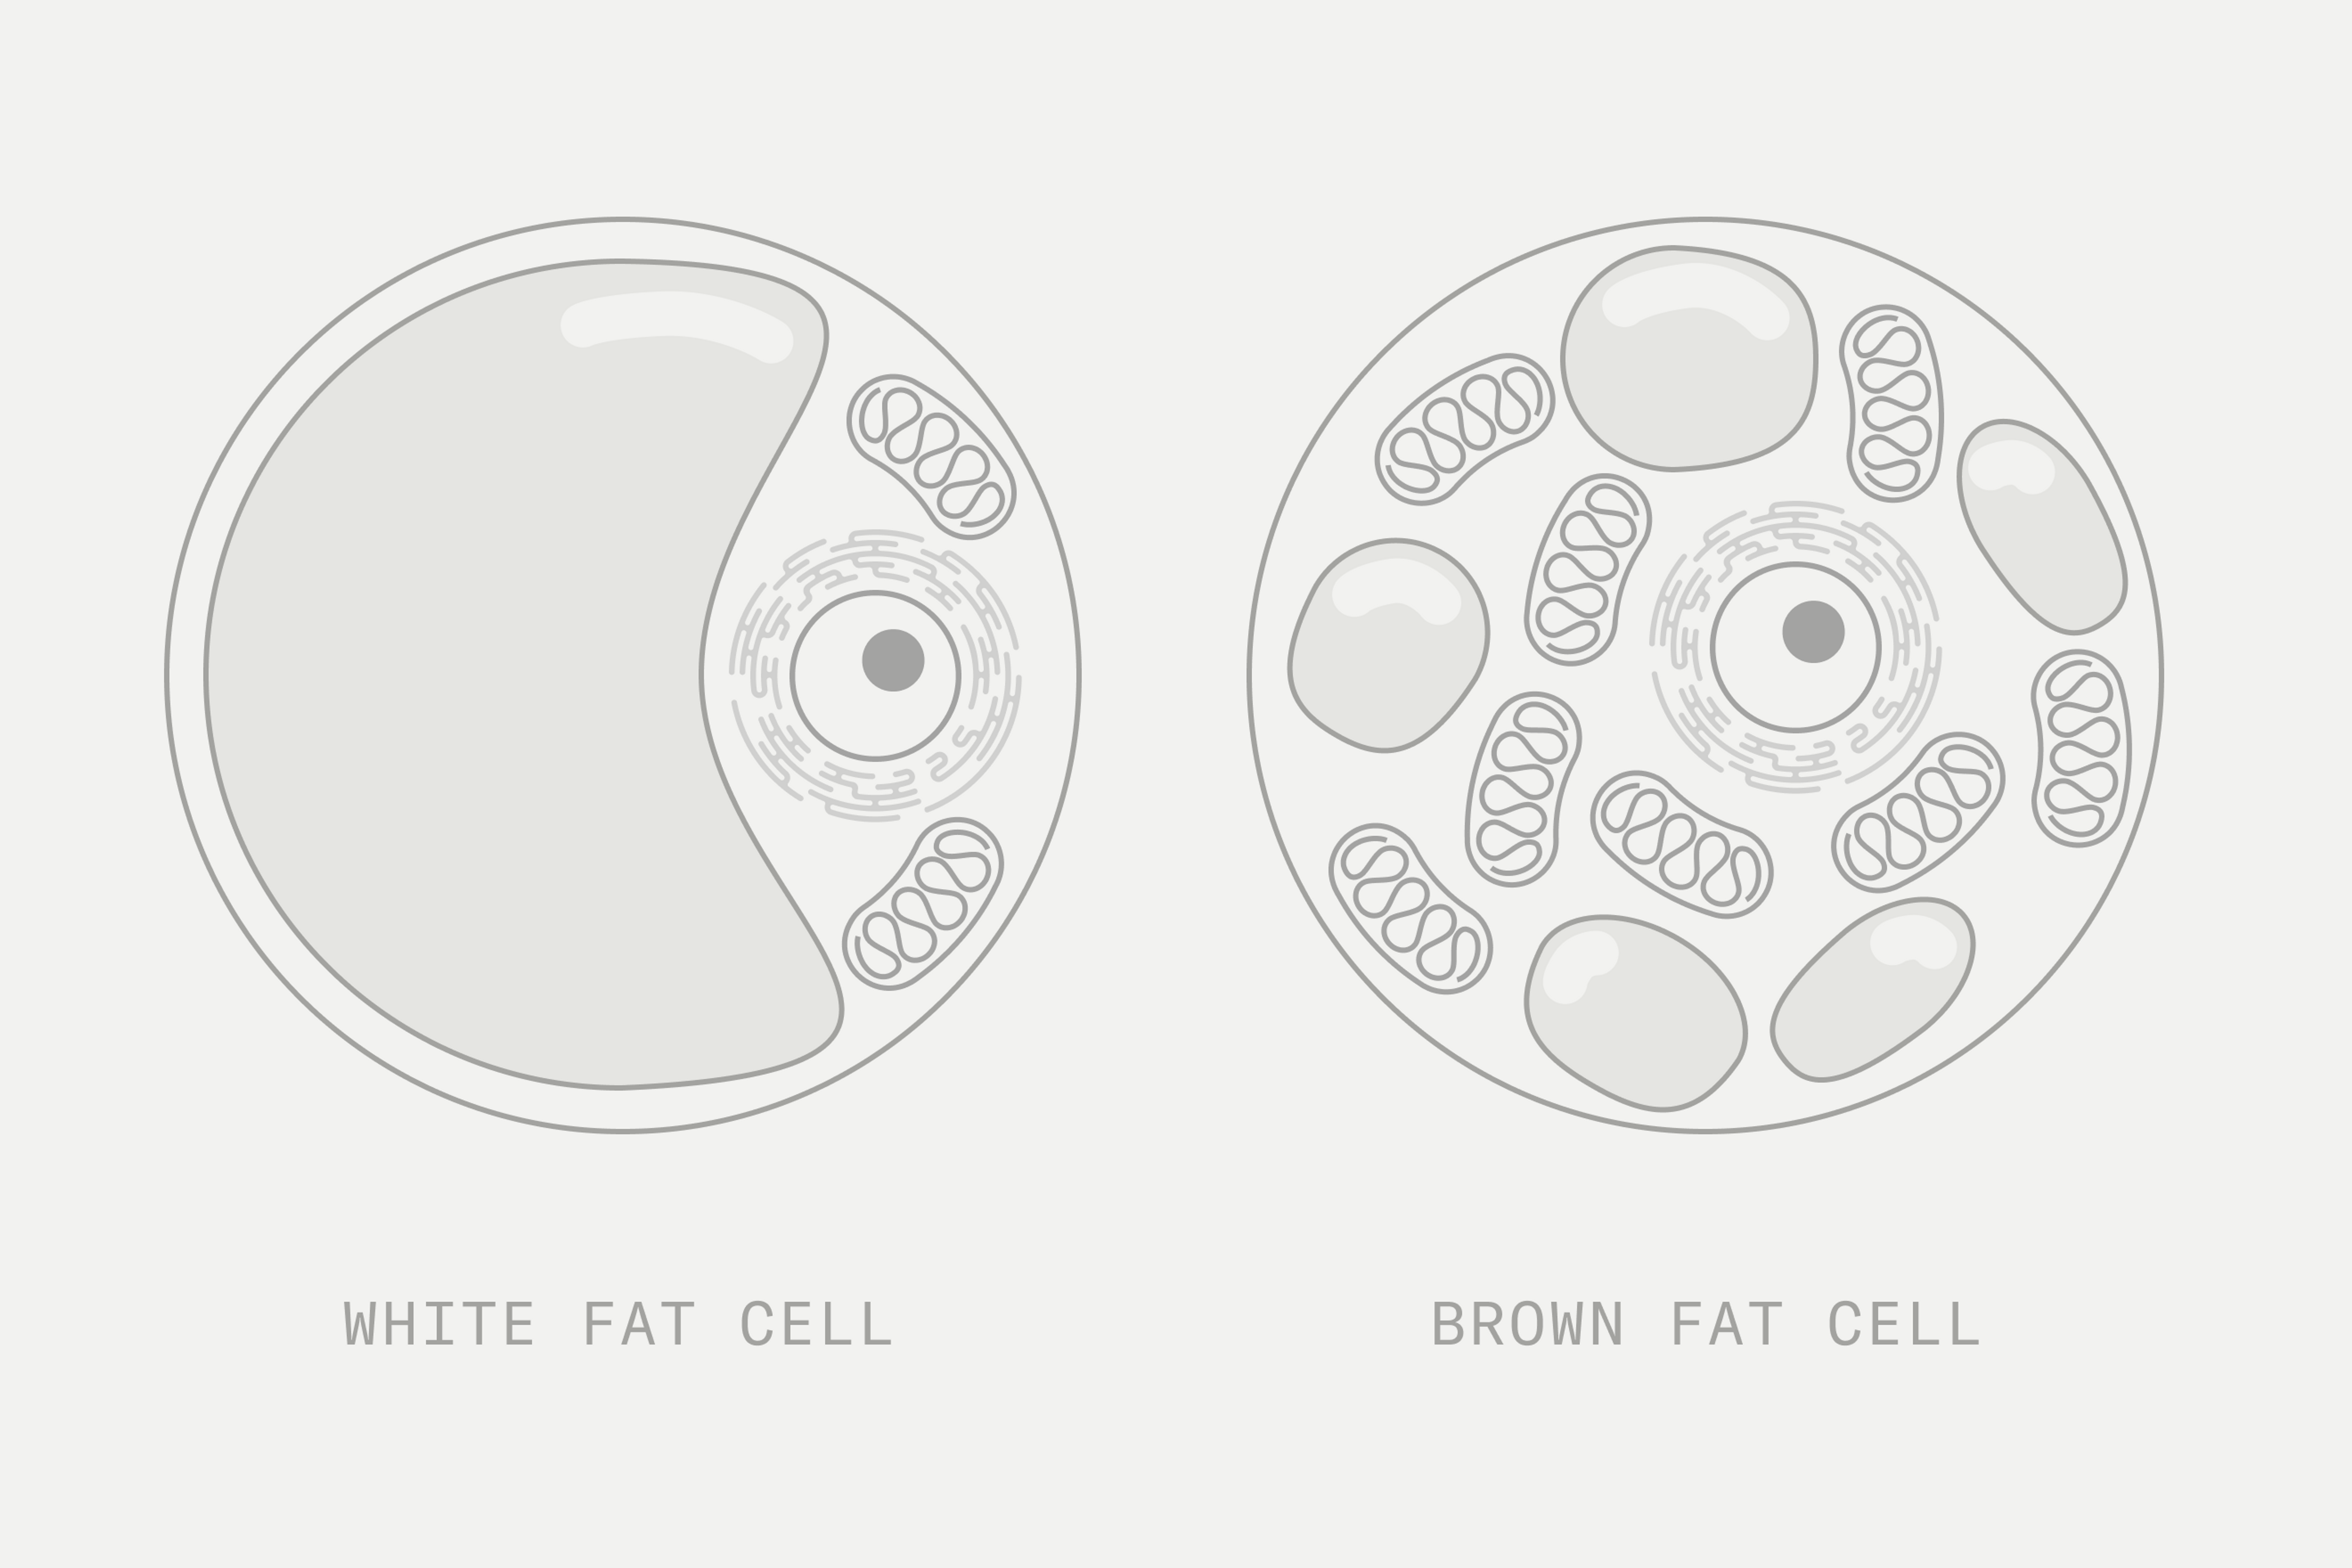 Brown Fat Cells vs White Fat Cells